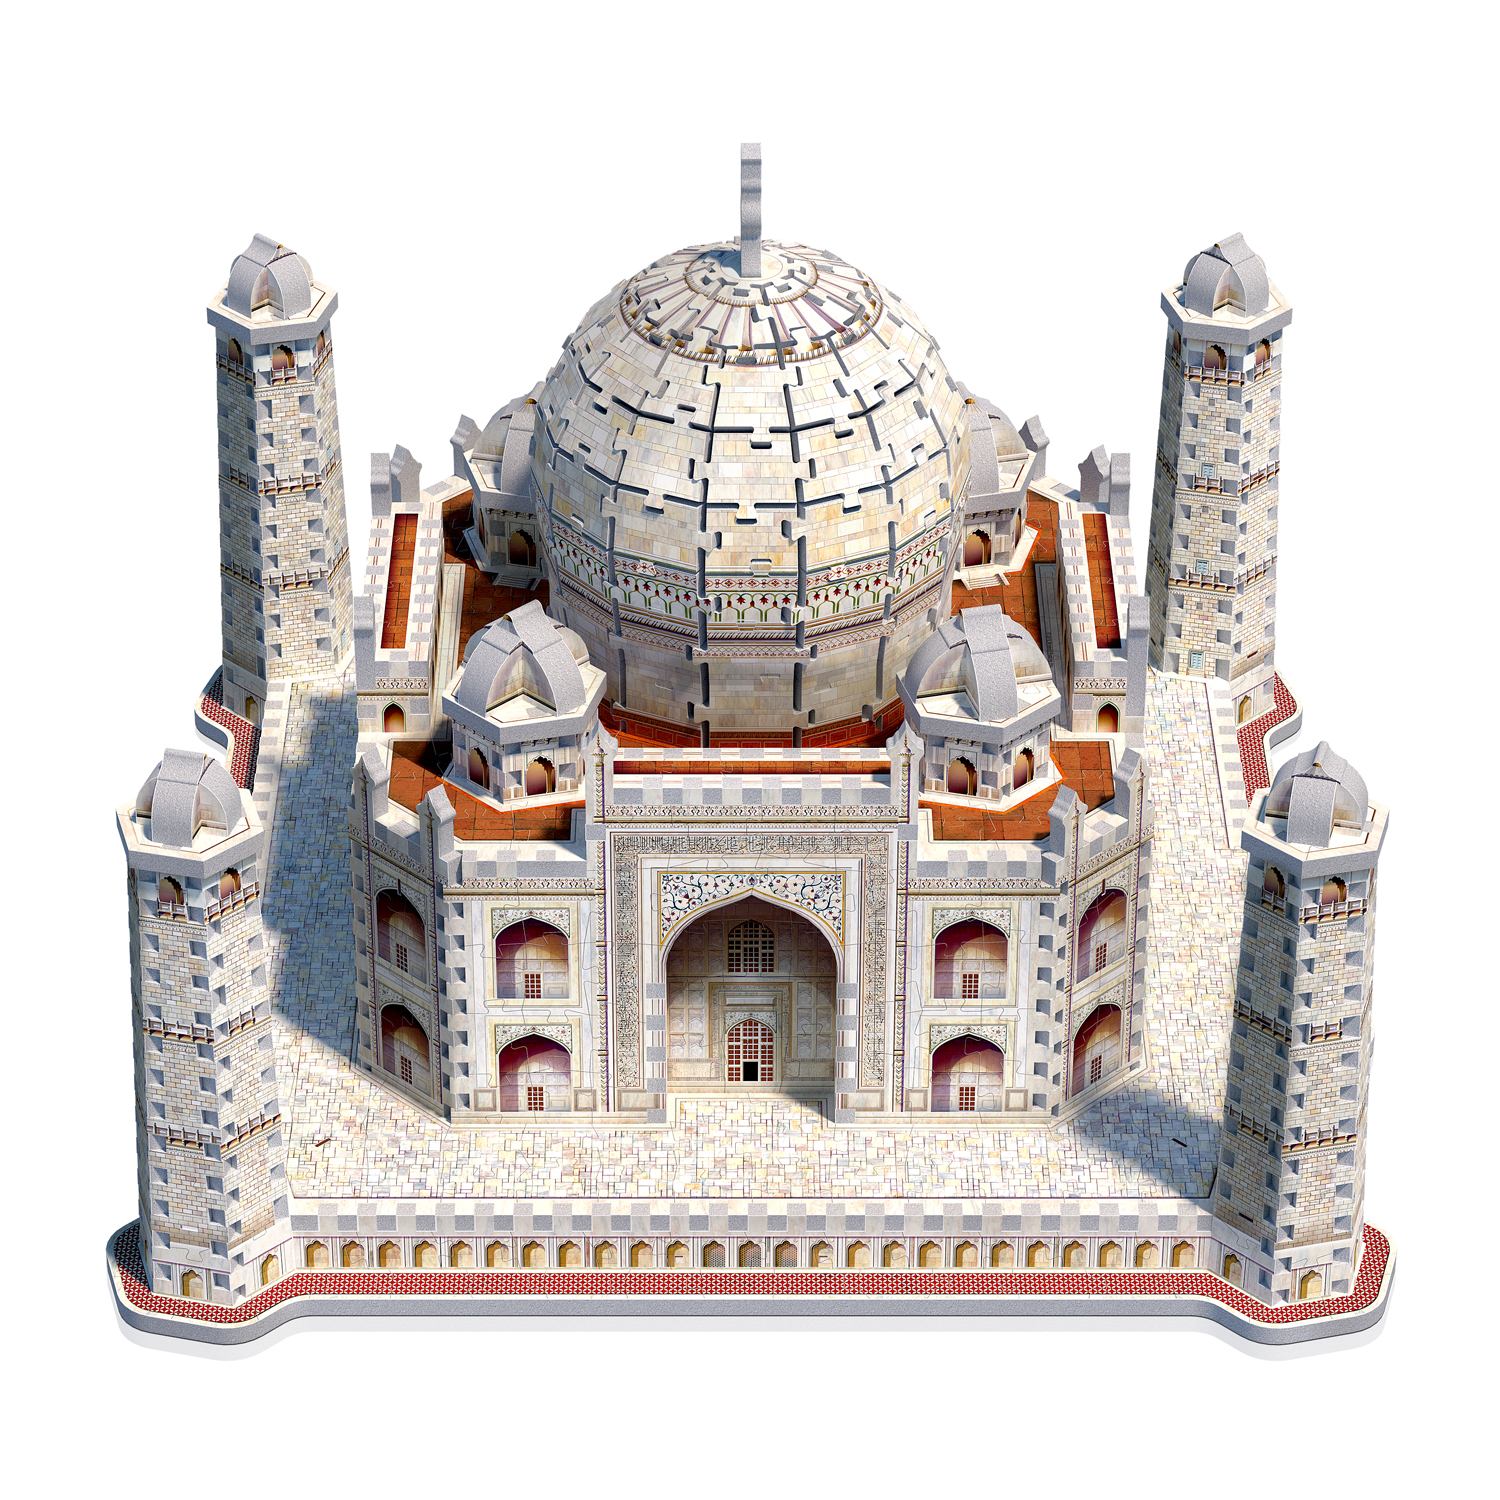 Puzz 3D 1995 wrebbit Puzz 3D Taj Mahal Puzzle Pieces are Factory Sealed 